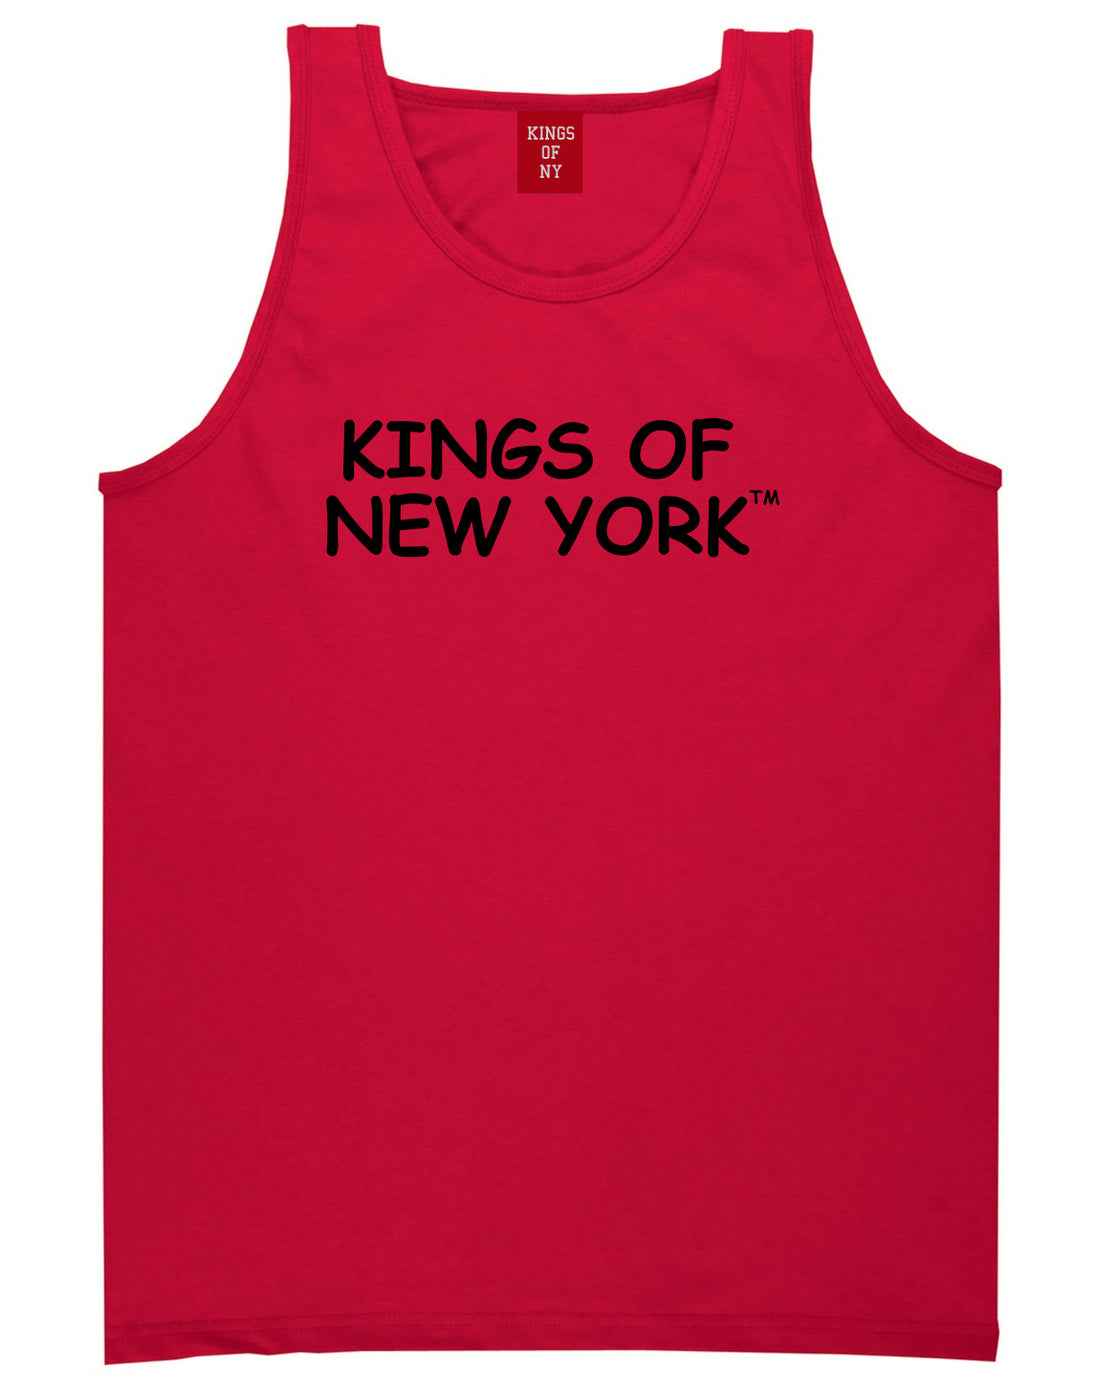 Kings Of New York TM Mens Tank Top T-Shirt Red